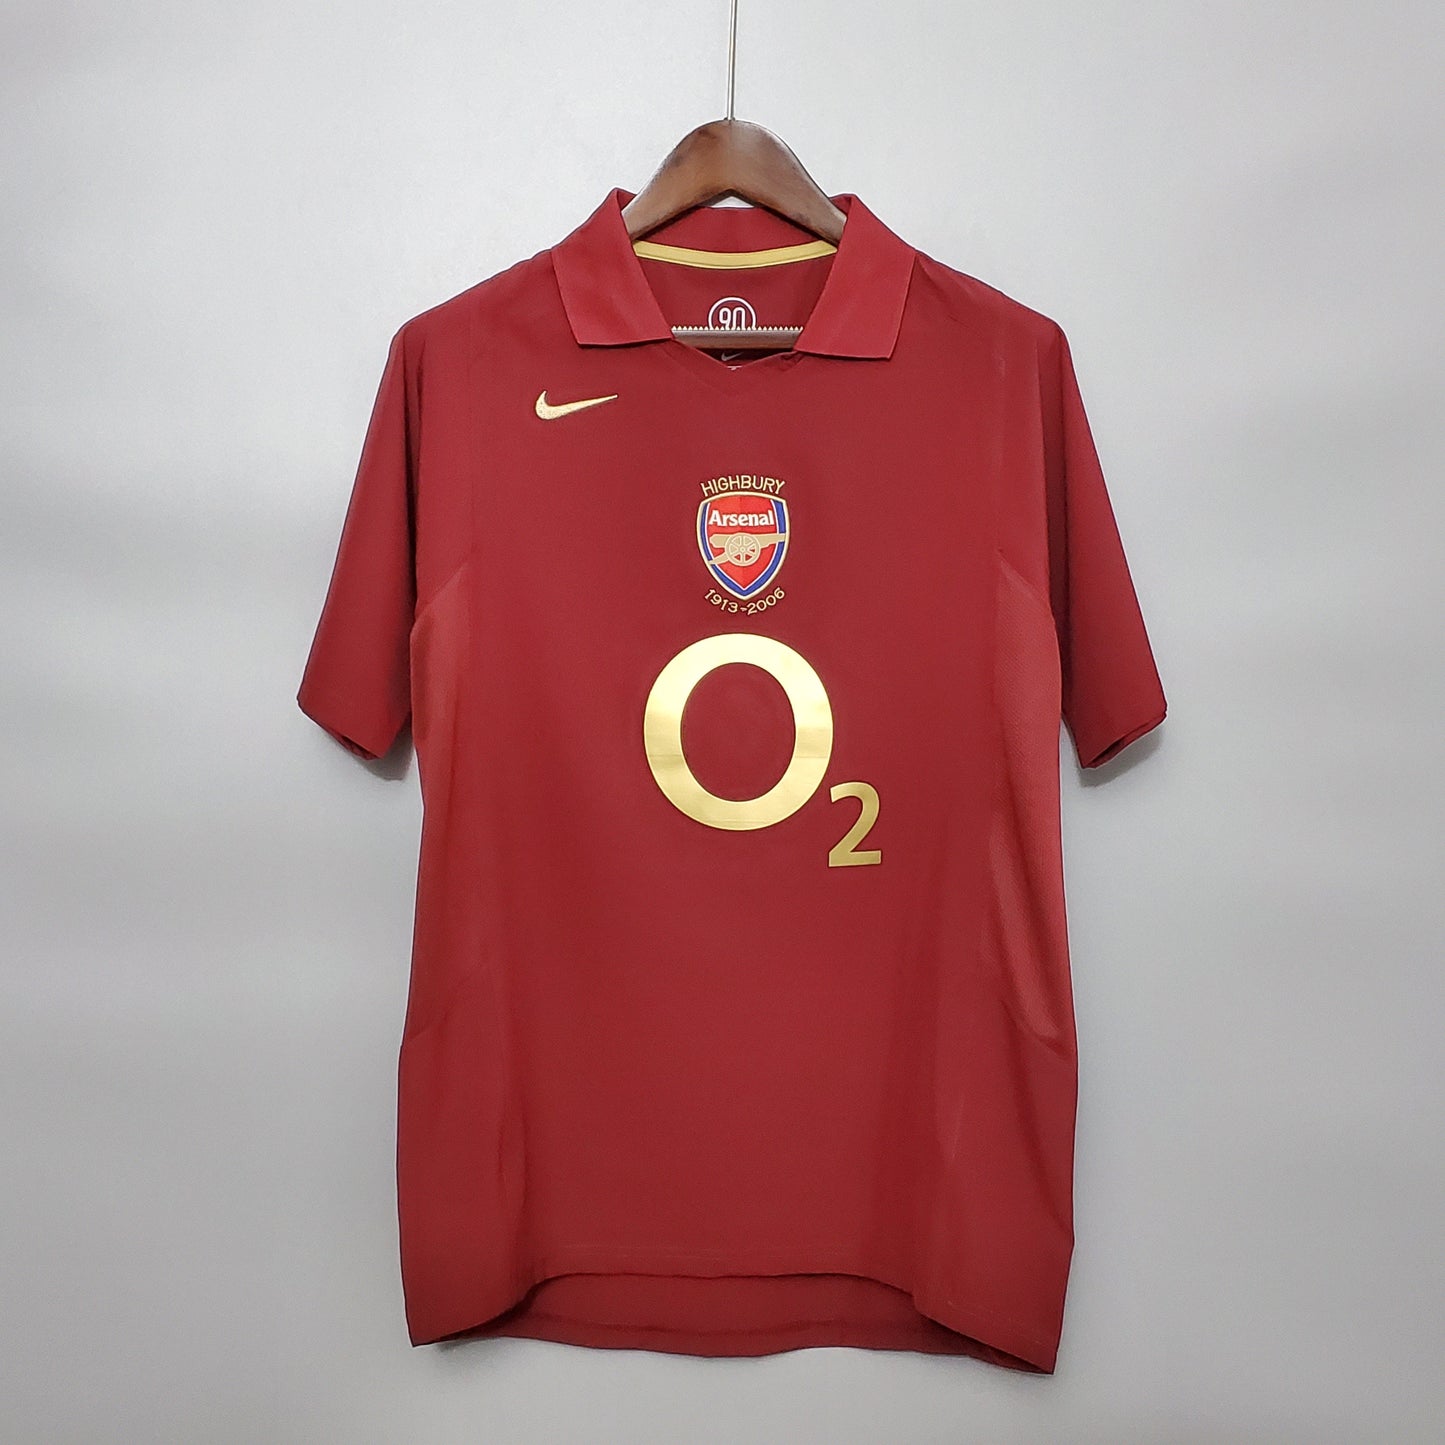 Arsenal Home Kit 05/06